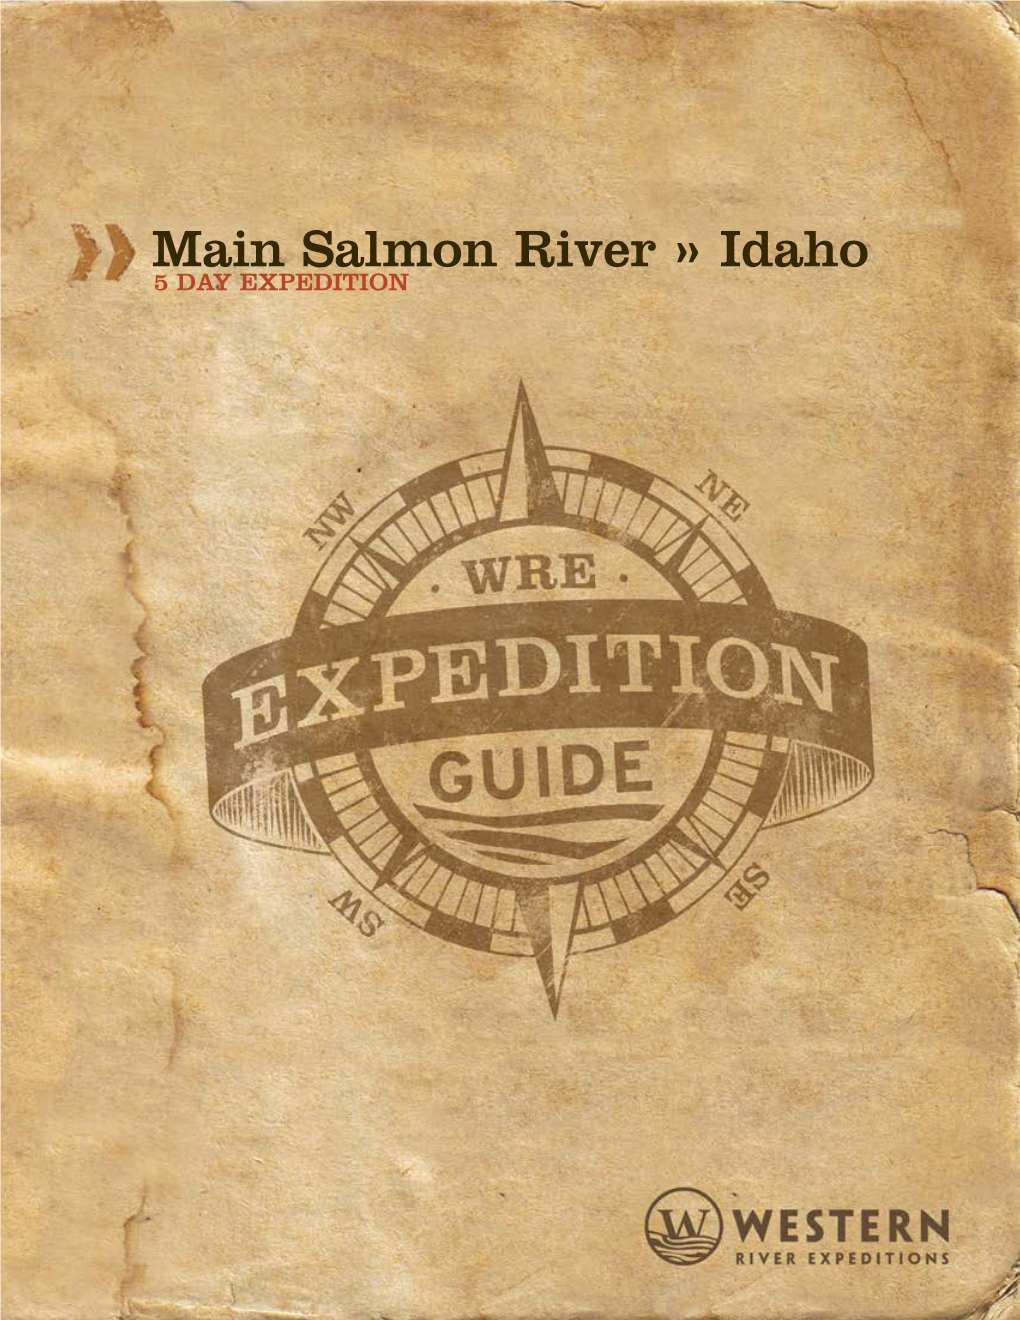 Main Salmon River » Idaho 5 DAY EXPEDITION Main Salmon River » Idaho 5 DAY EXPEDITION